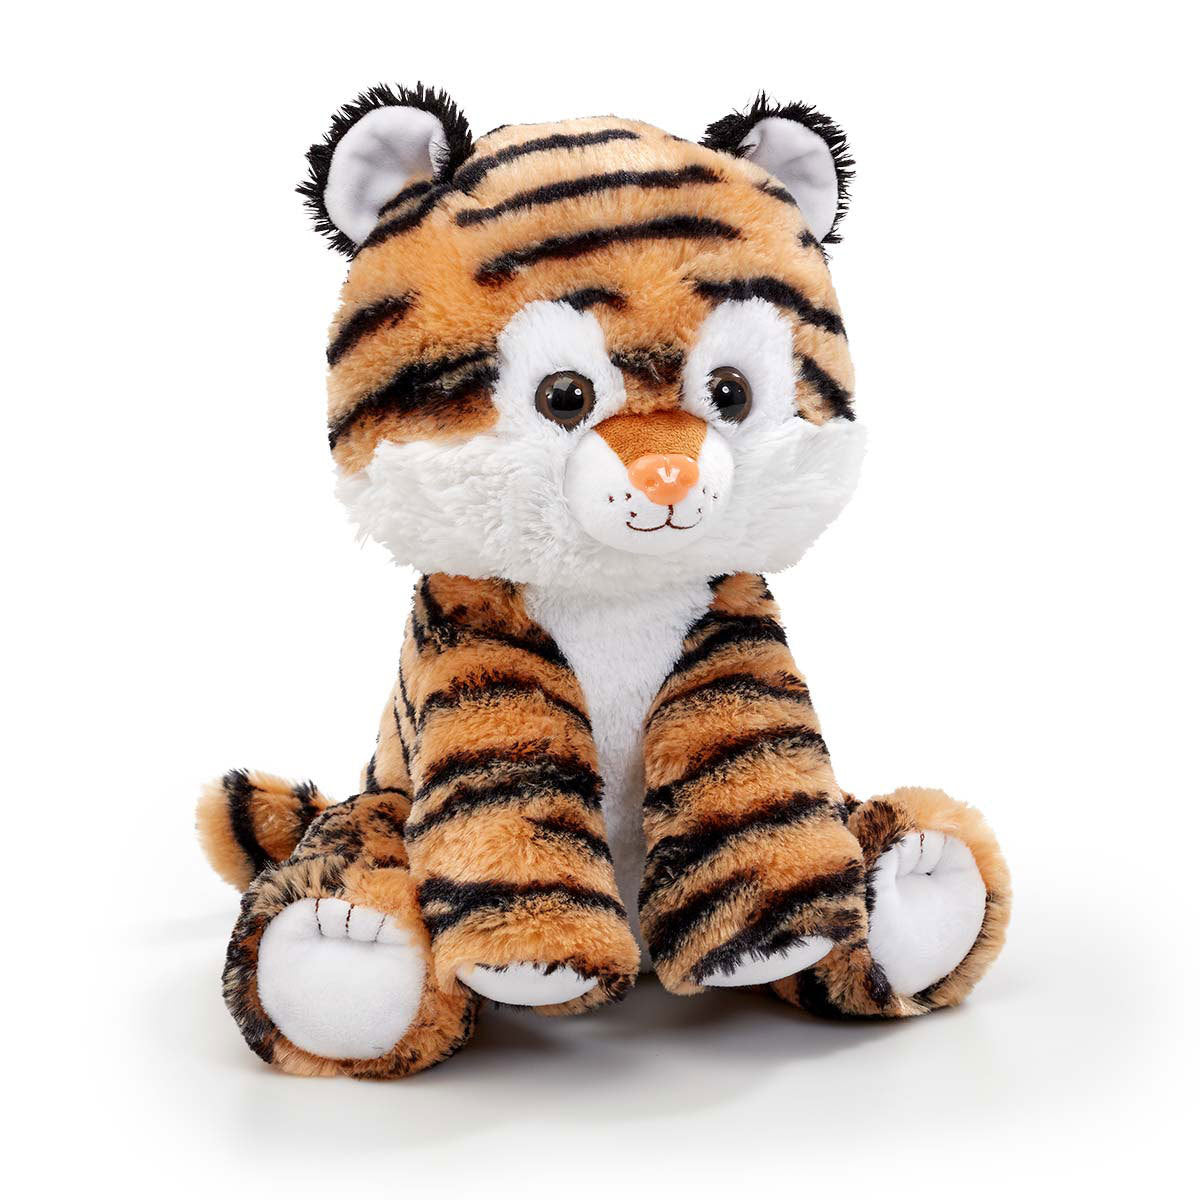 Snuggle Buddies 32cm Endangered Animals Plush Toy - Tiger